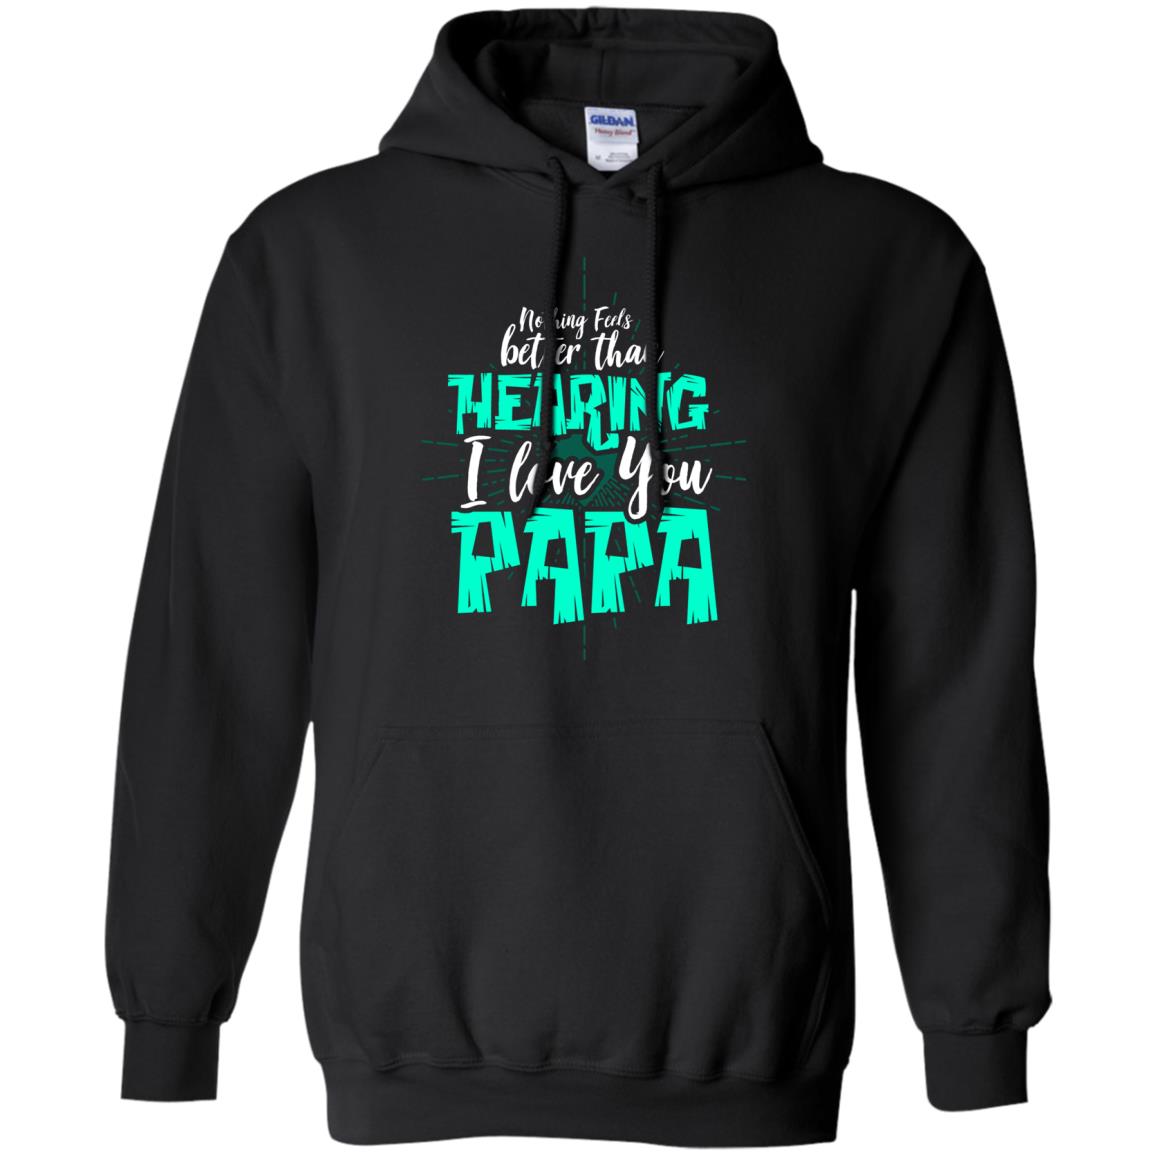 Nothing Feels Better Than Hearing I Love You Papa Cool Saying Shirt For Papa